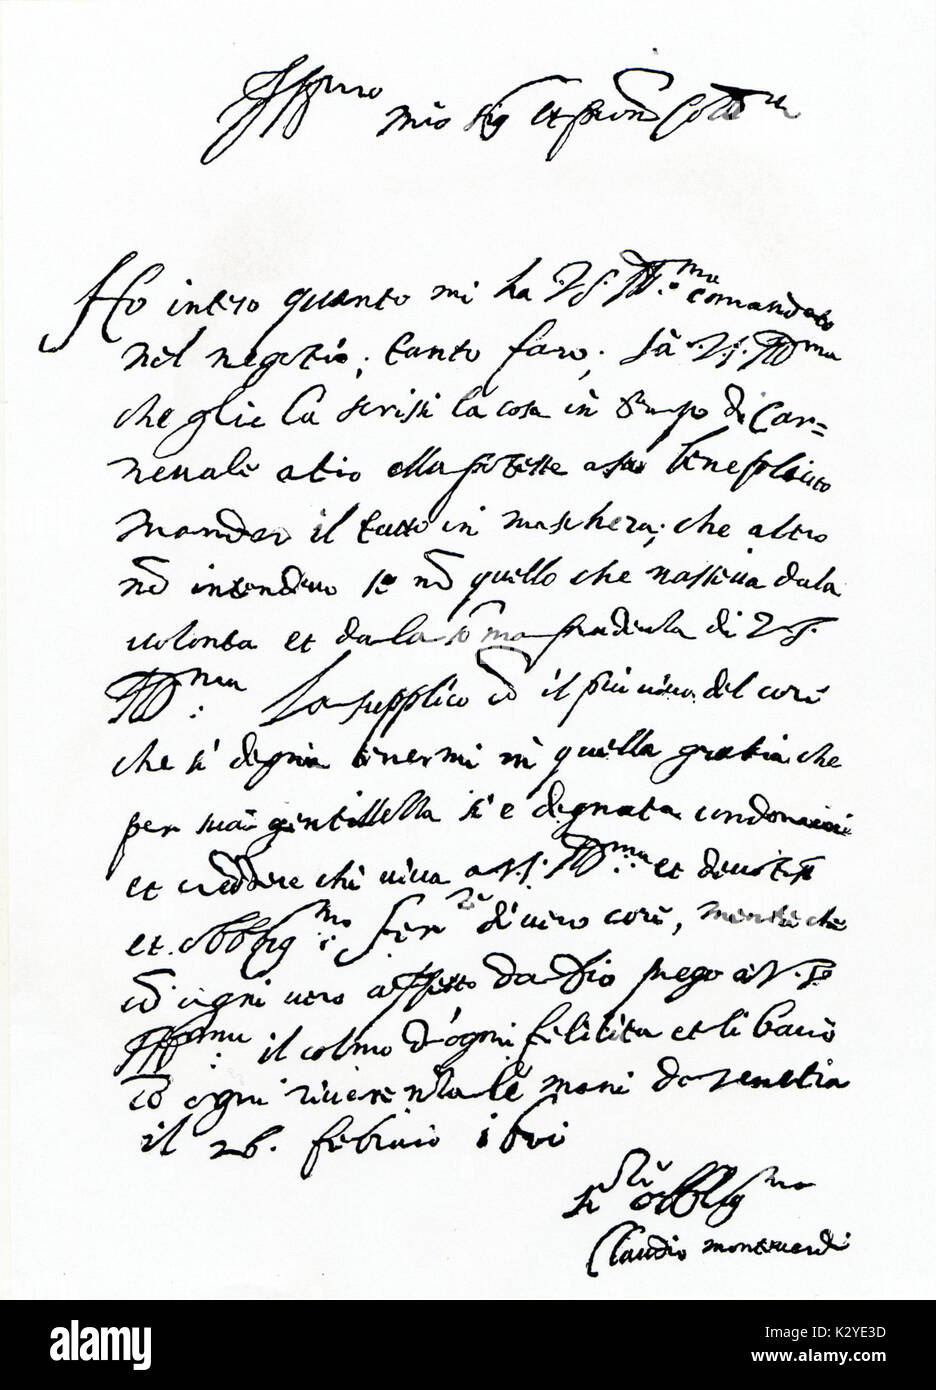 Claudio Monteverdi, autograph letter to his patron-Italian composer. 15 May 1567 - 29 November 1643. Stock Photo